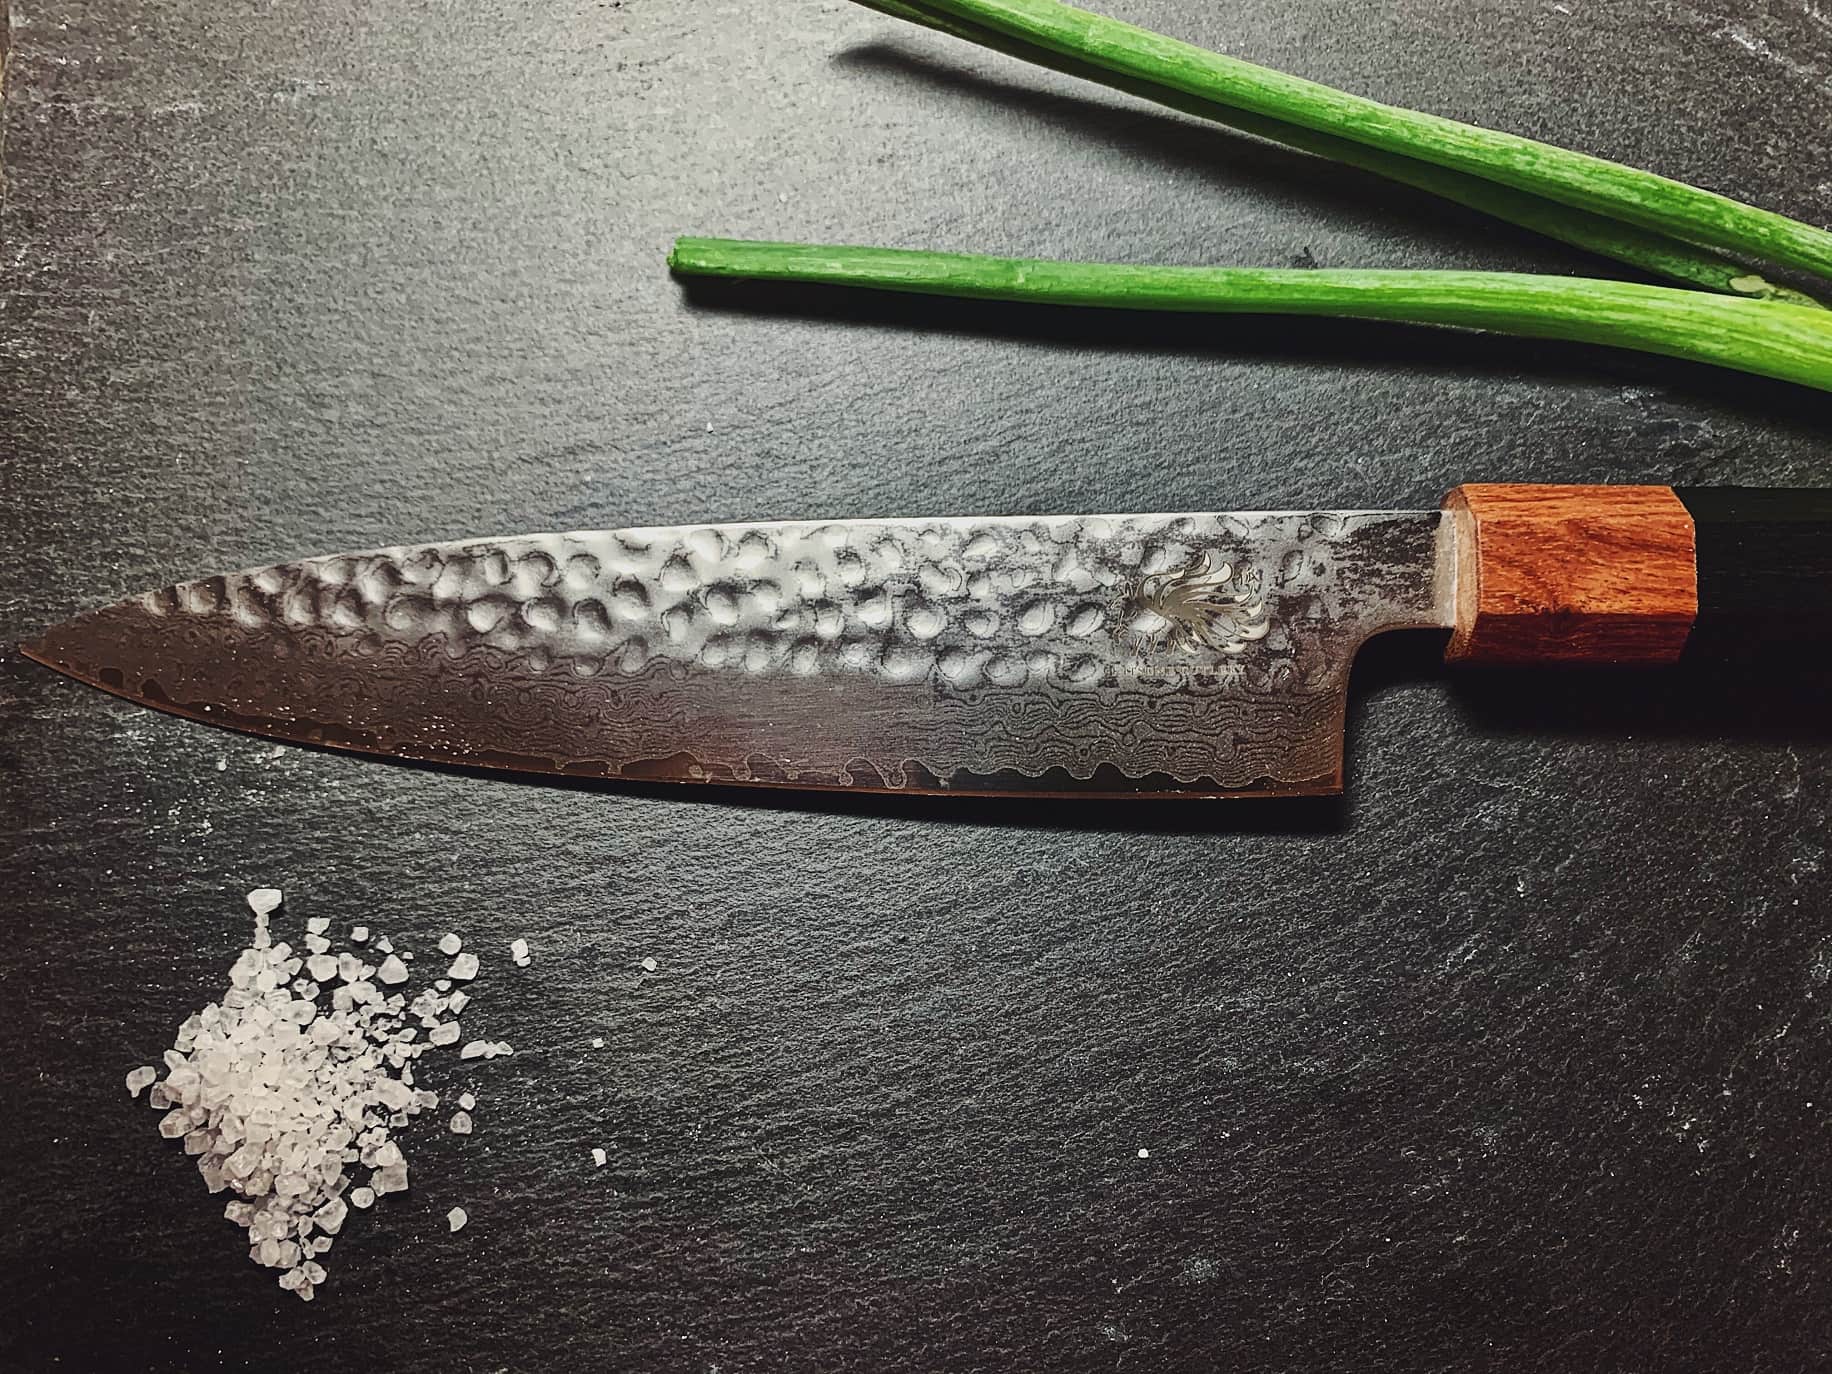 Kitsune Cutlery, 8 Inch VG-10 Damascus Kitsune Chef Knife